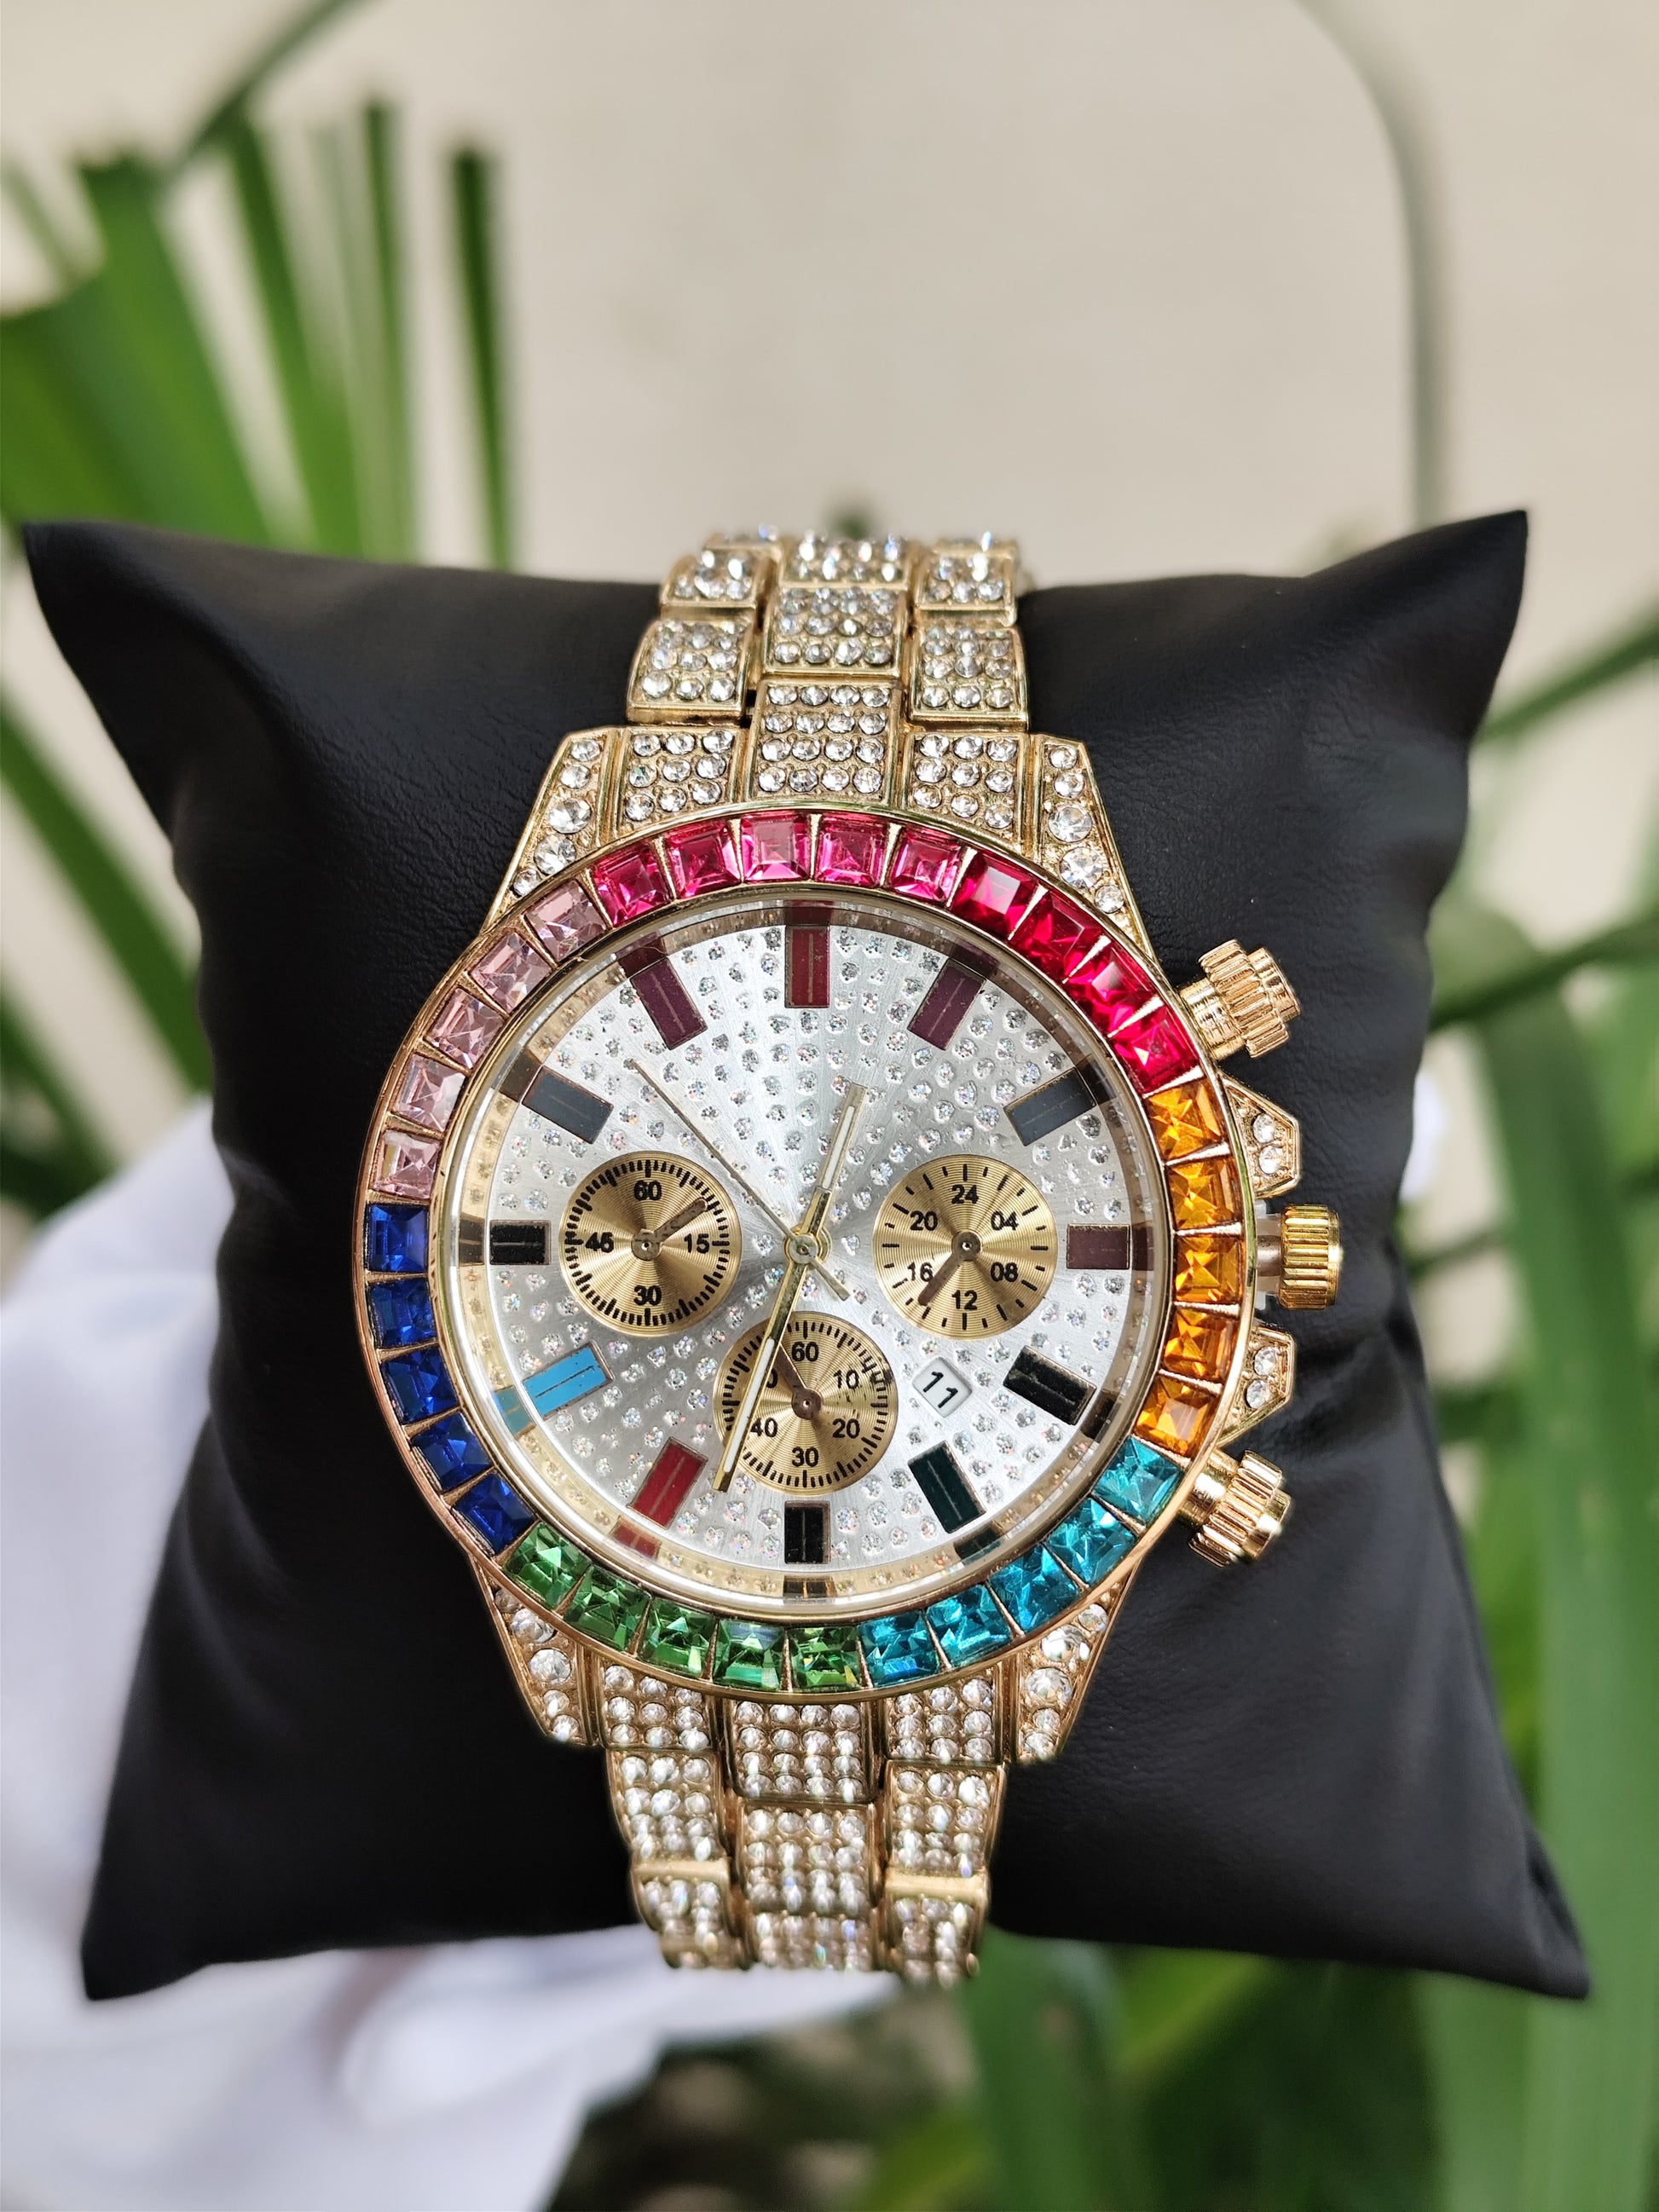 Reloj de lujo de cuarzo tipo daytona con diamantes en colores. - Iced Out Watches